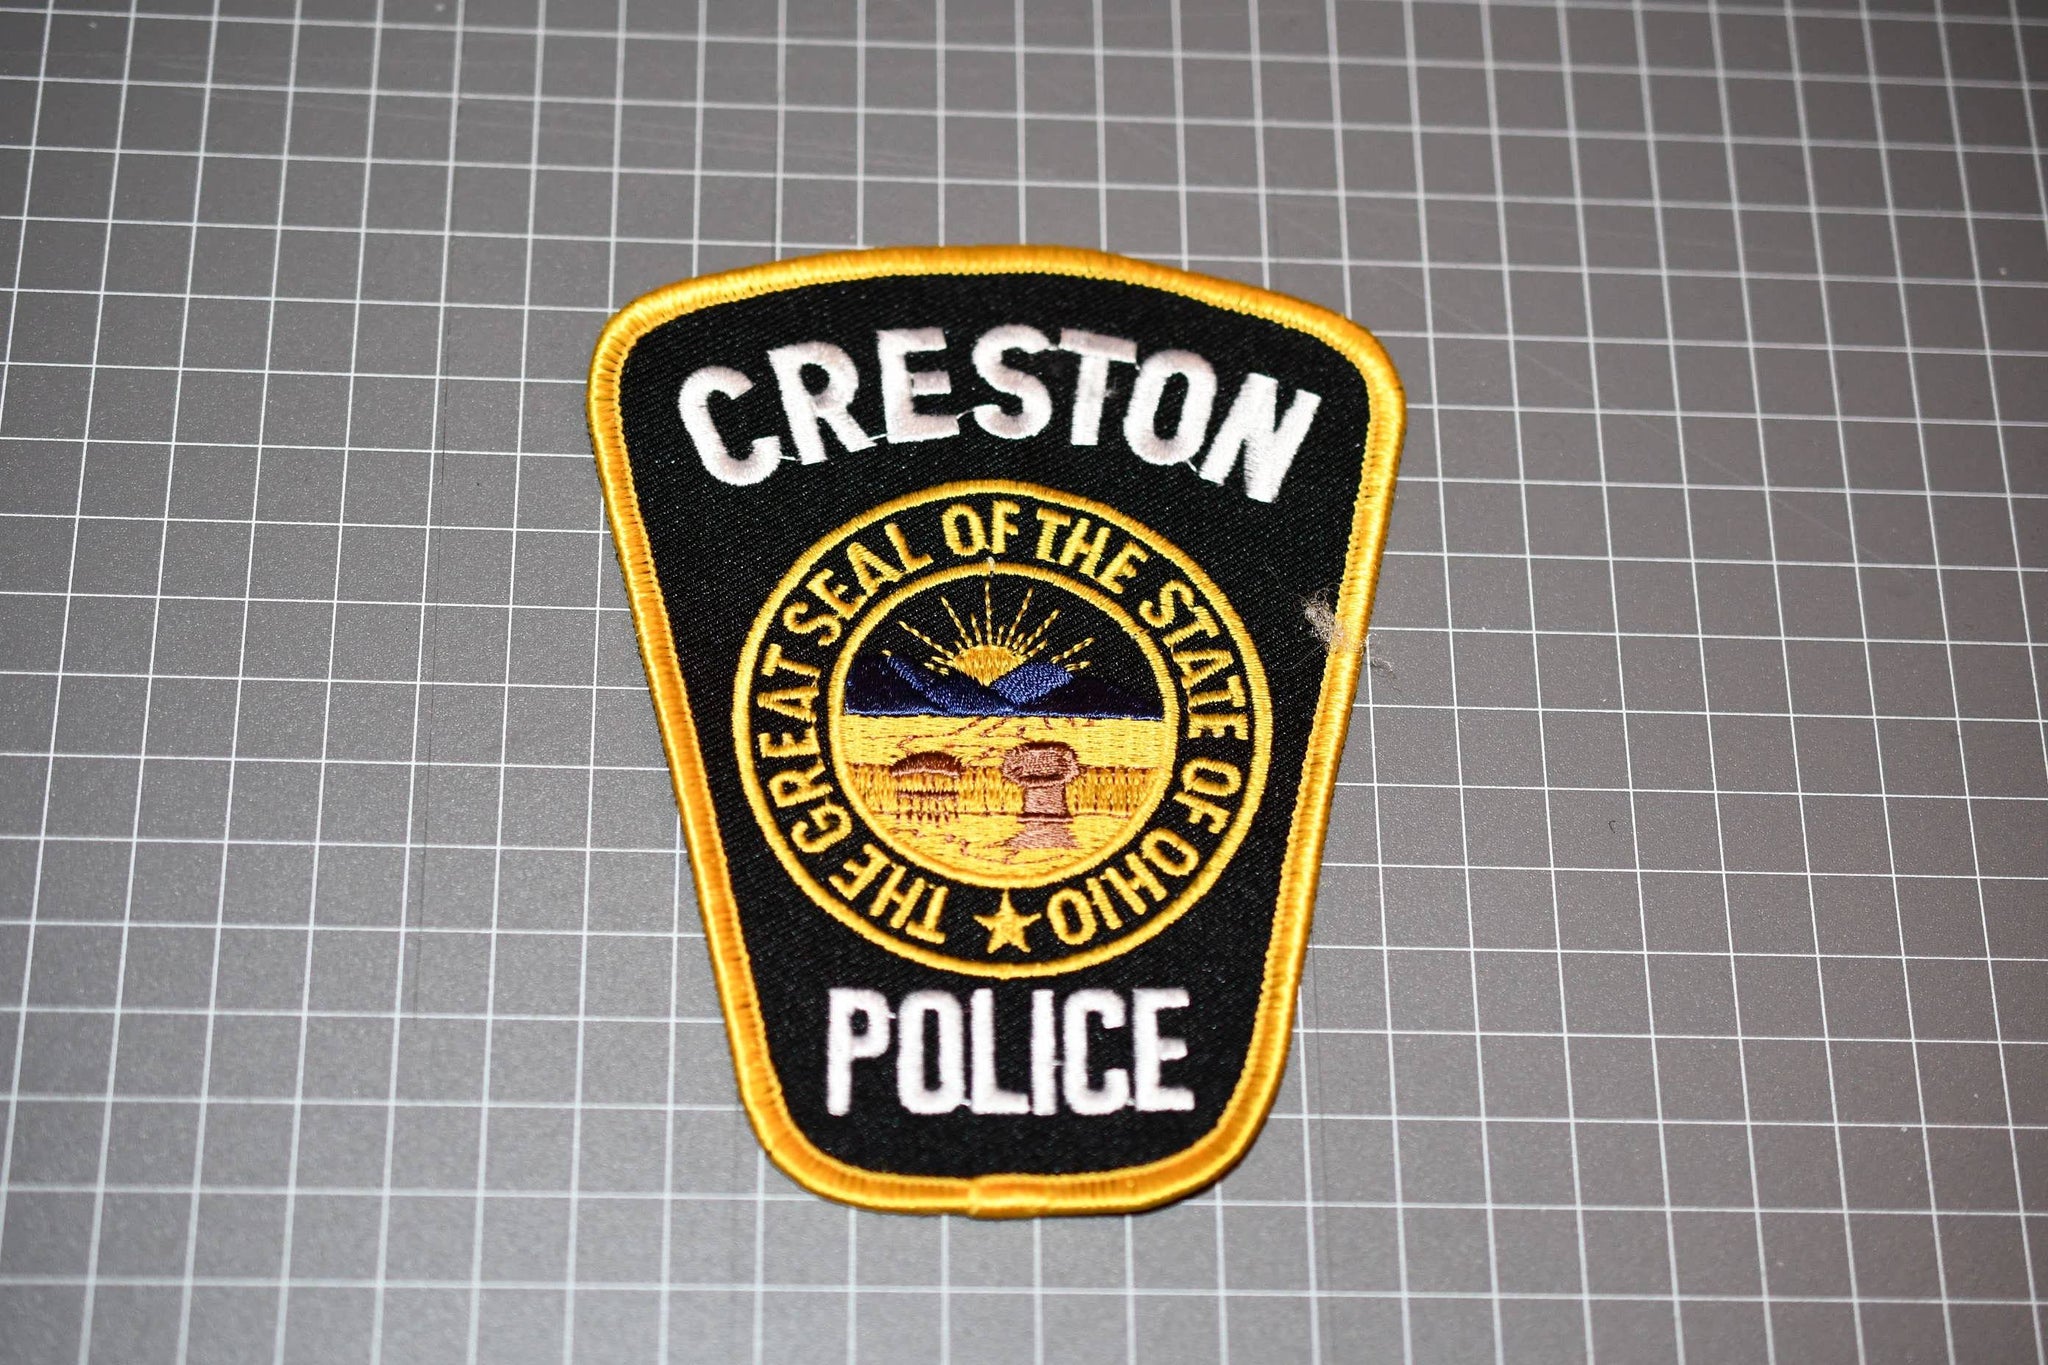 Creston Ohio Police Patch (B8)